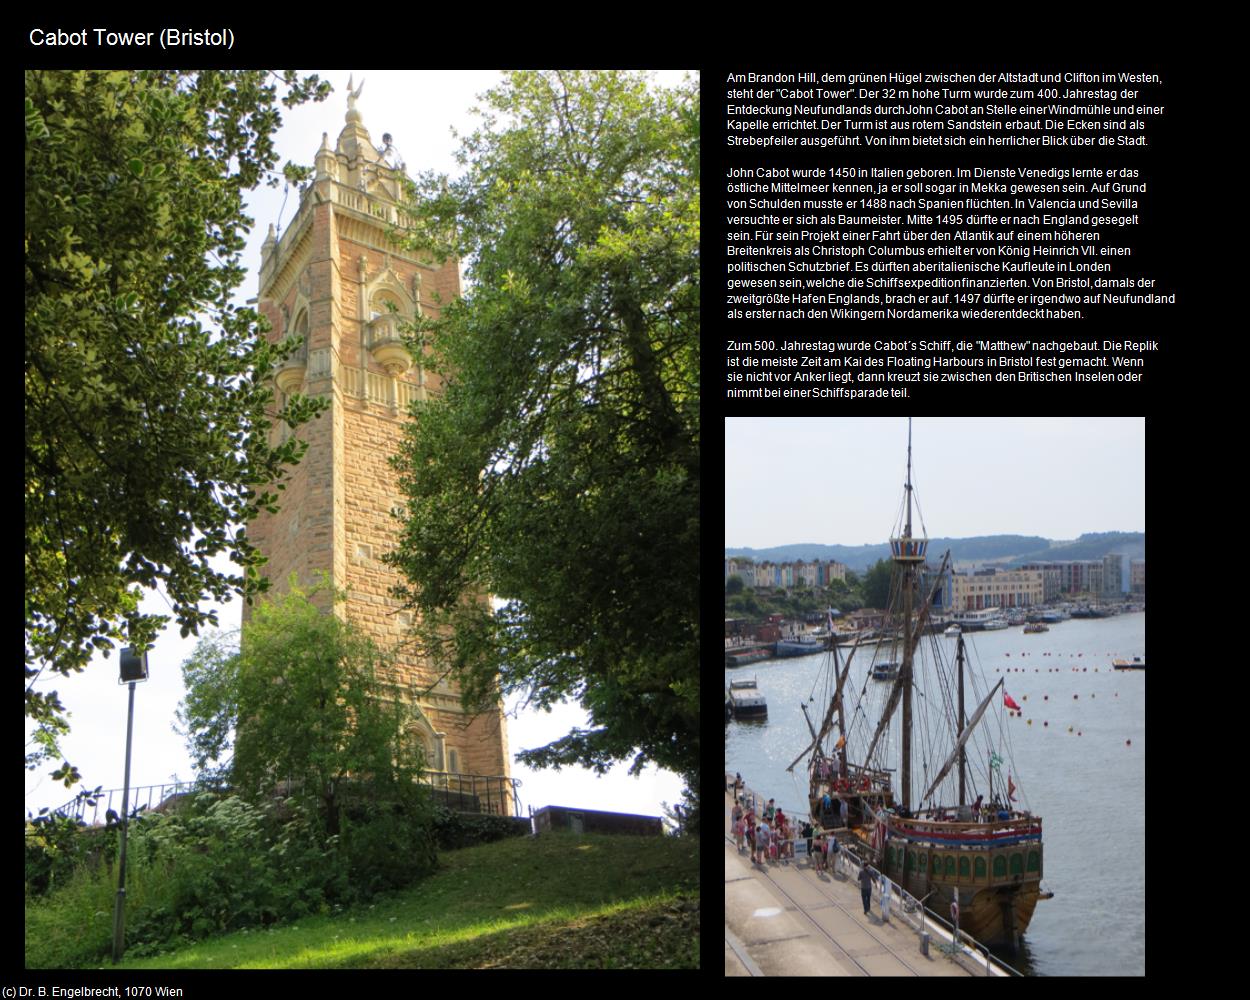 Cabot Tower (Bristol, England) in Kulturatlas-ENGLAND und WALES